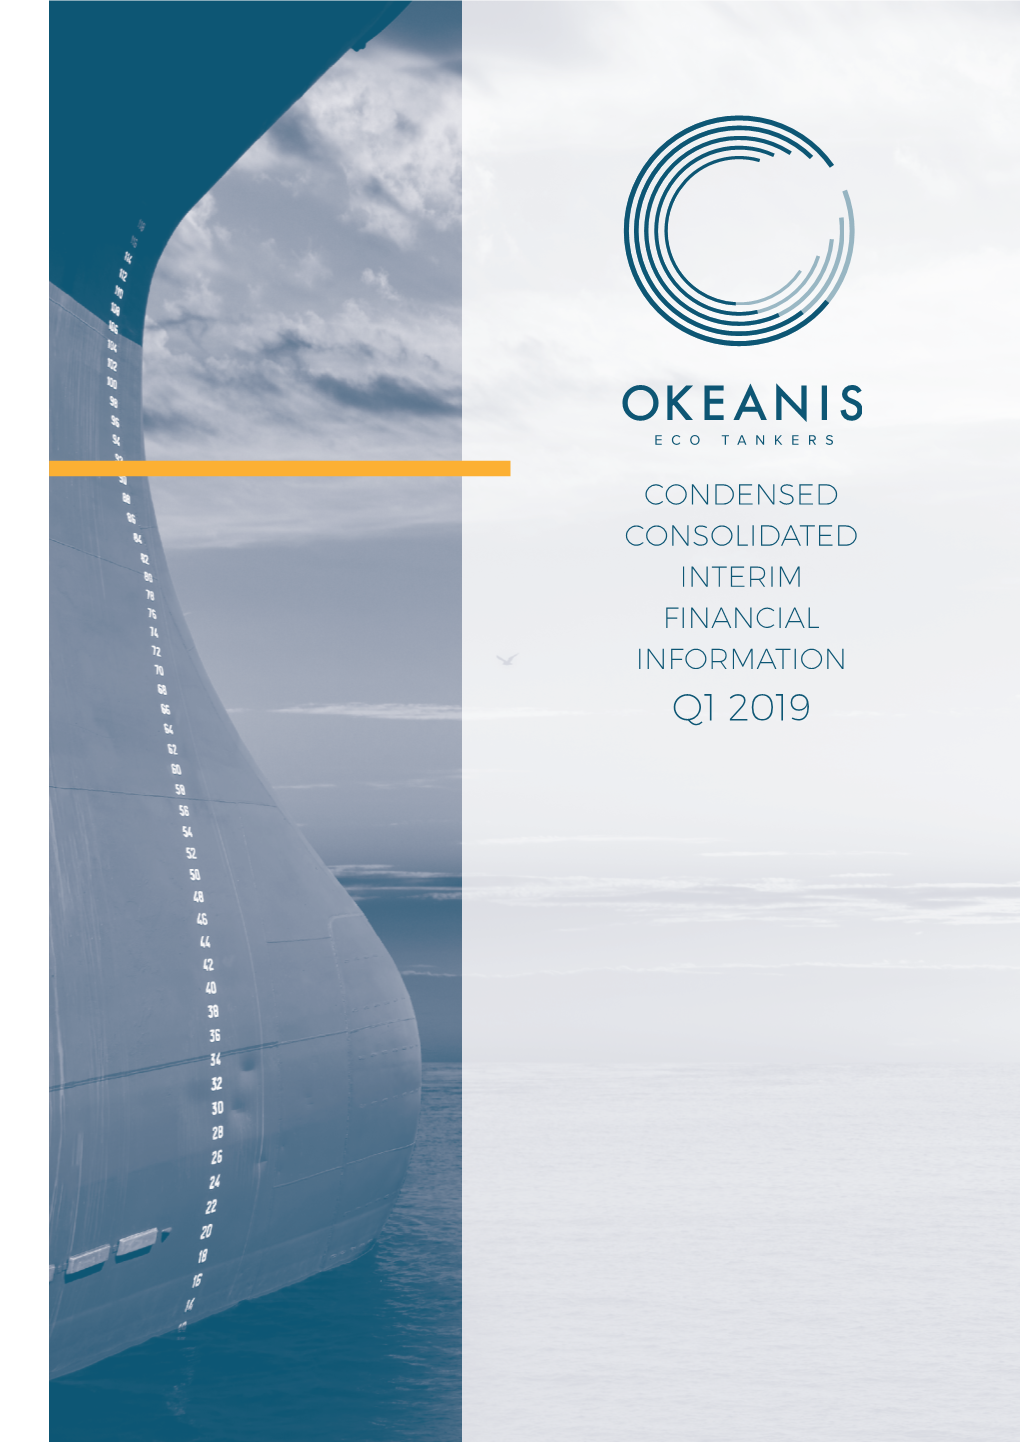 Q1 2019 2 Okeanis Eco Tankers Okeanis Eco Tankers Q1 2019 Report 3